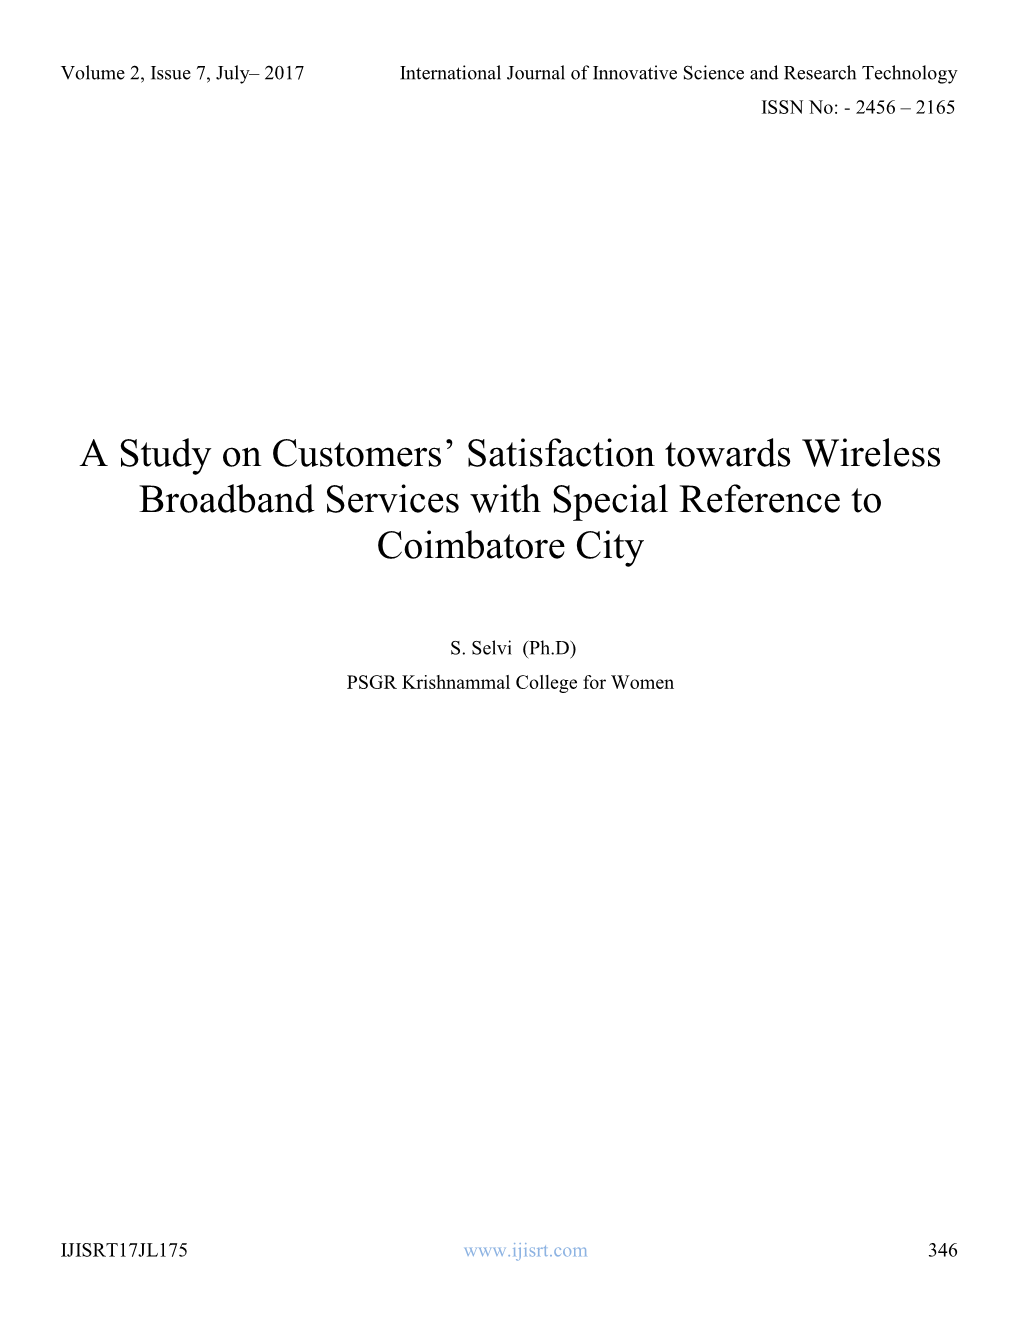 A Study on Customers' Satisfaction Towards Wireless Broadband